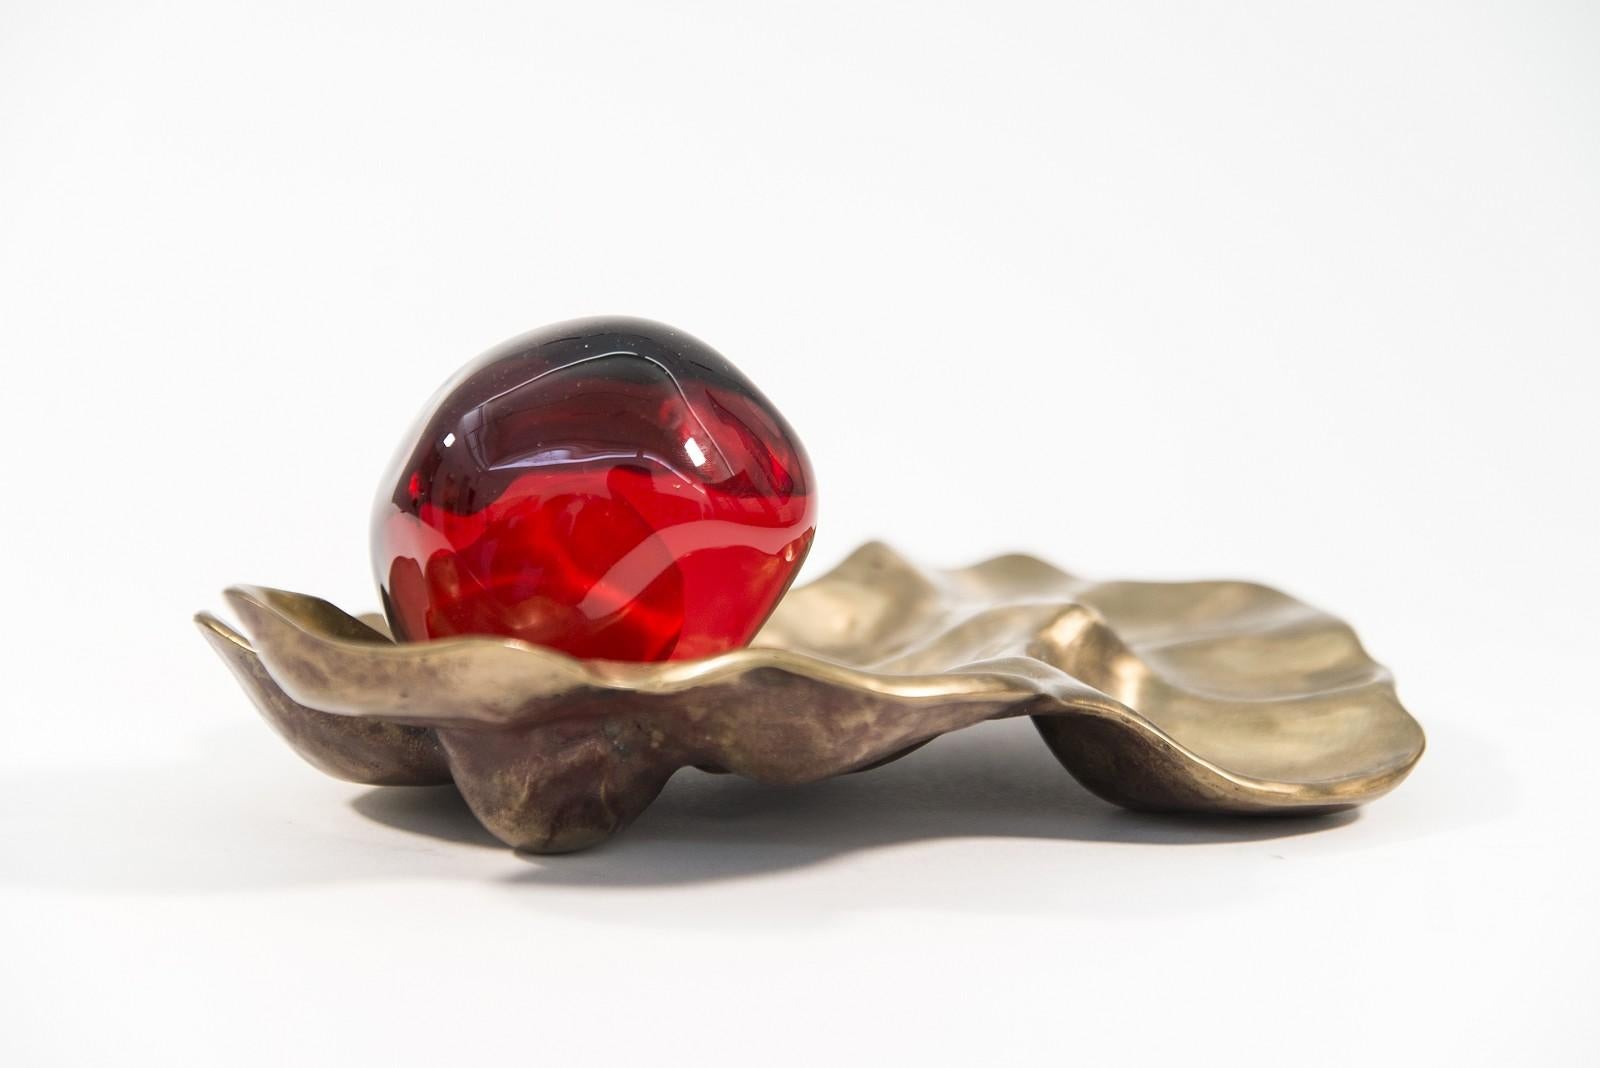 Grenade avec enveloppe - petite sculpture en verre, bronze, nature morte, rouge vif - Or Figurative Sculpture par Catherine Vamvakas Lay